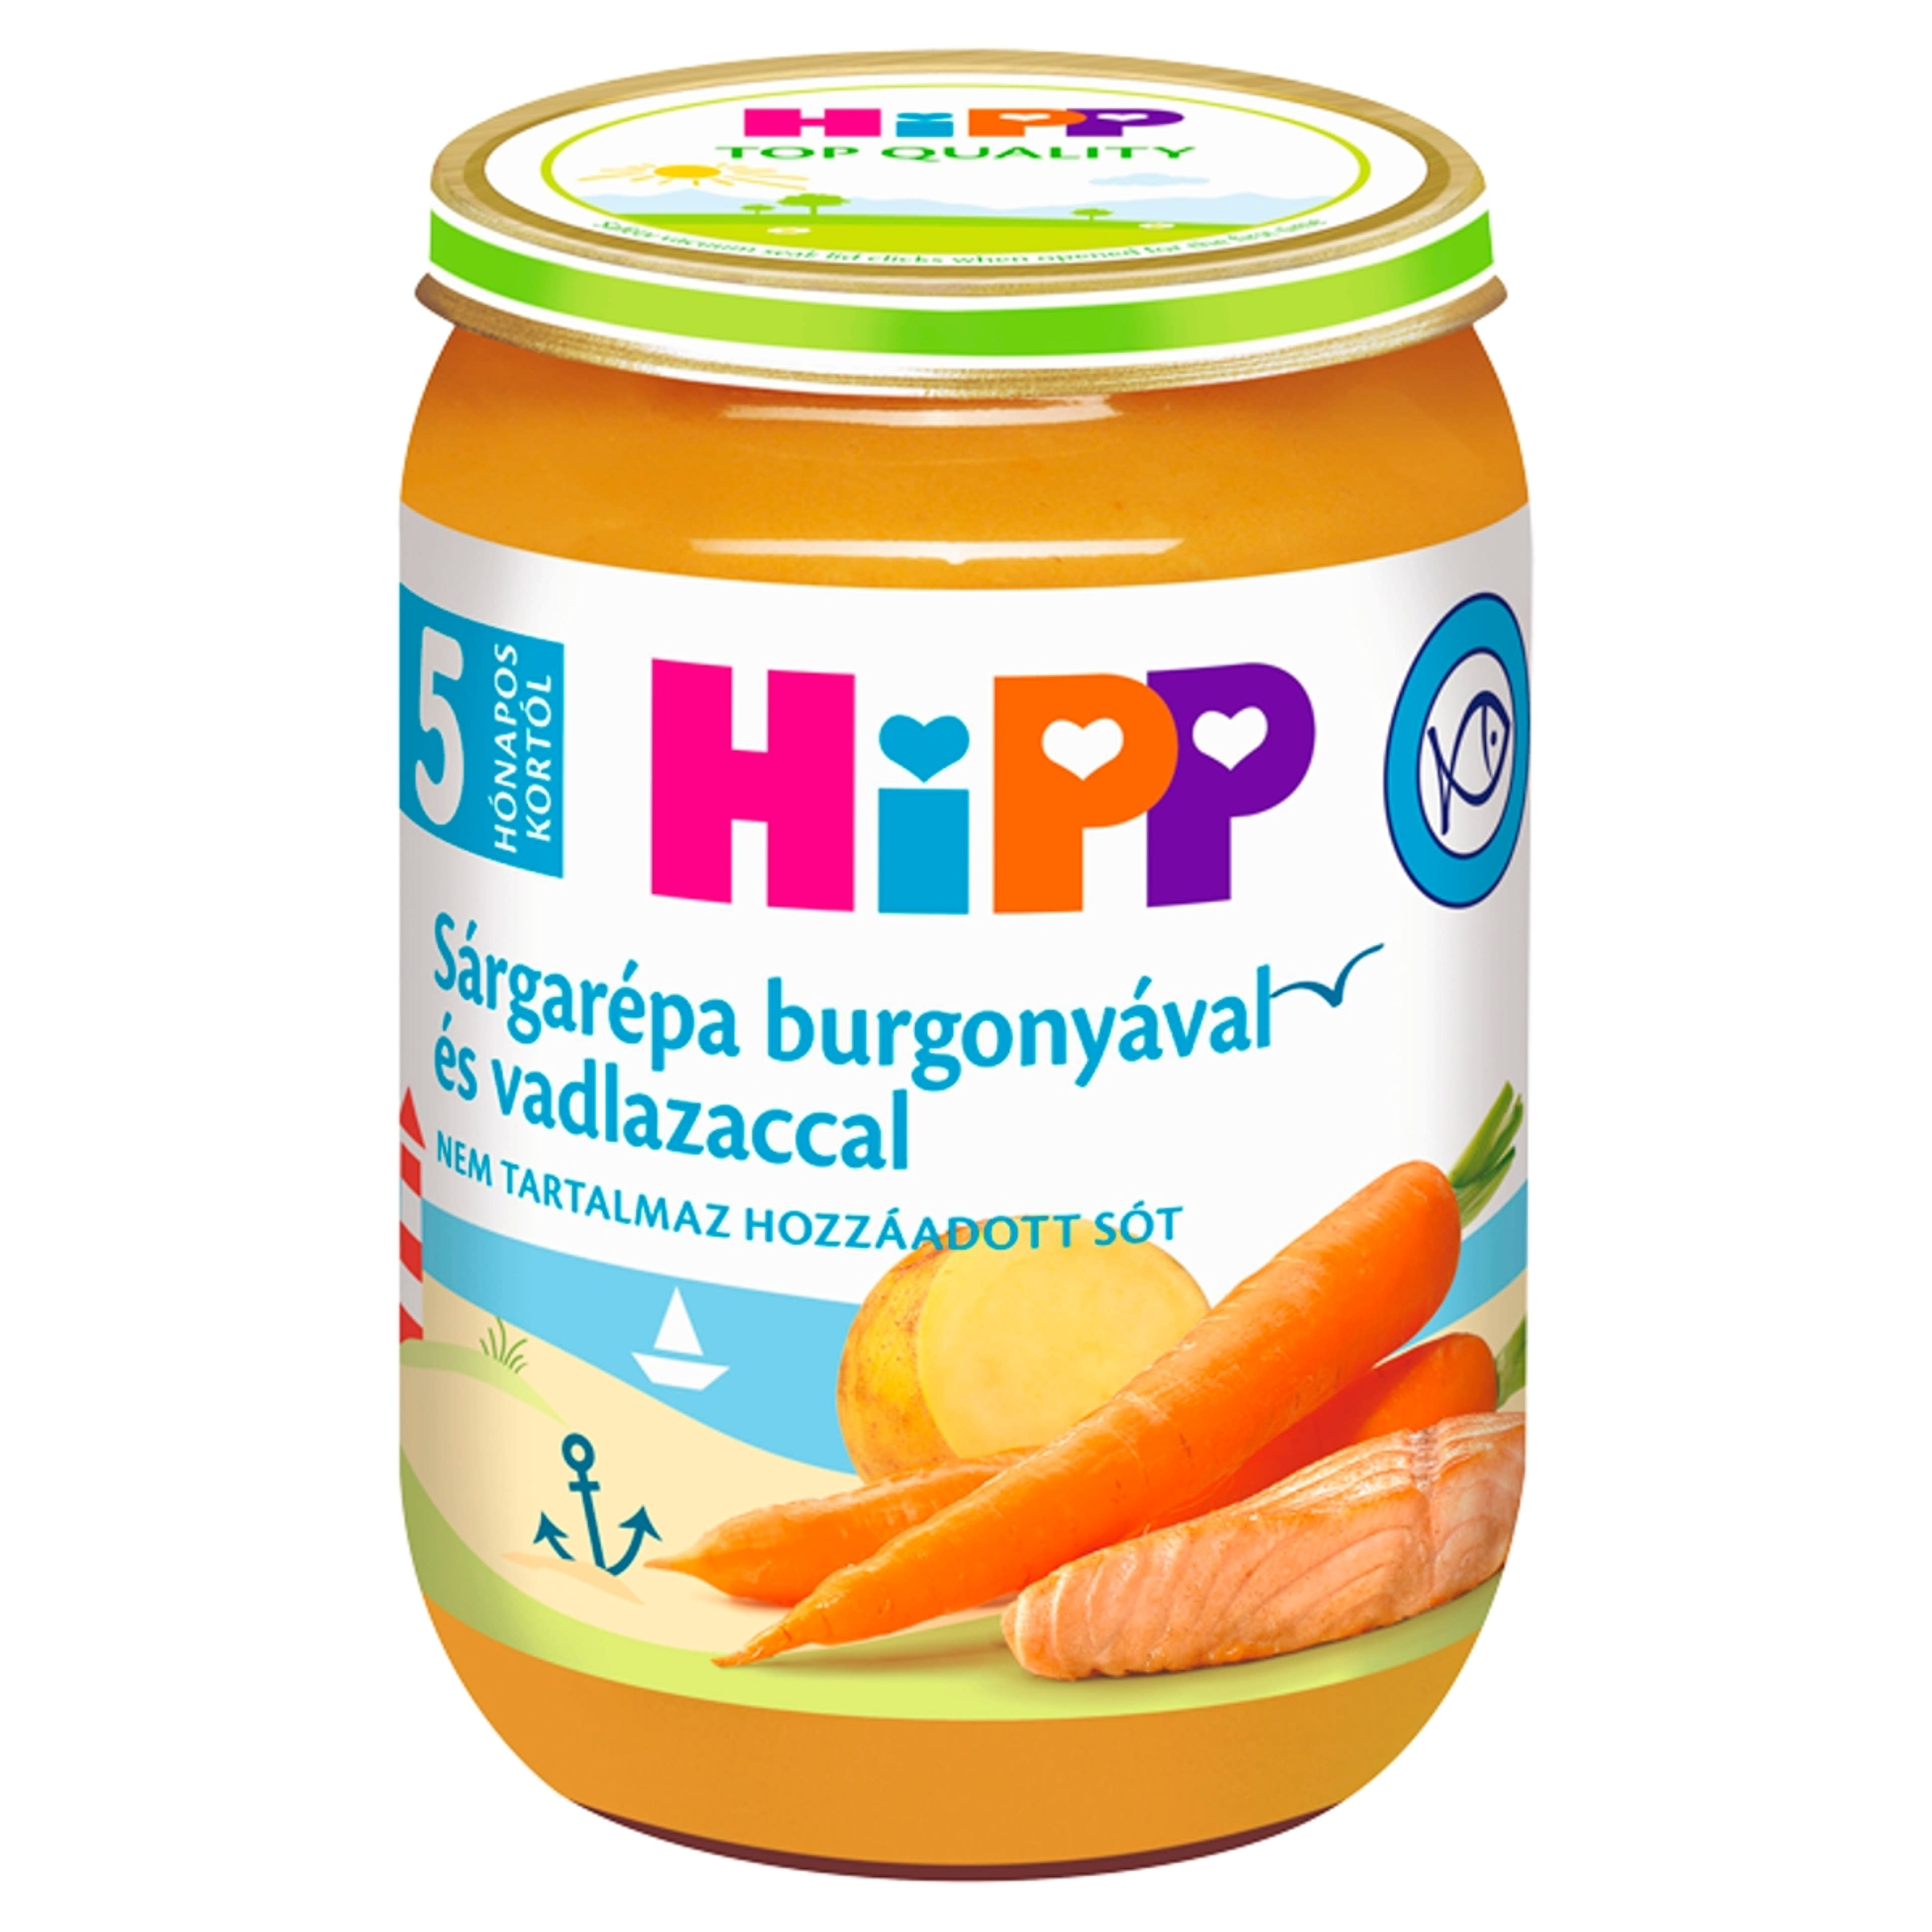 Hipp Bébiétel Sárgarépa Burgonya Vadlazaccal 5 Hónapos Kortól - 190 g